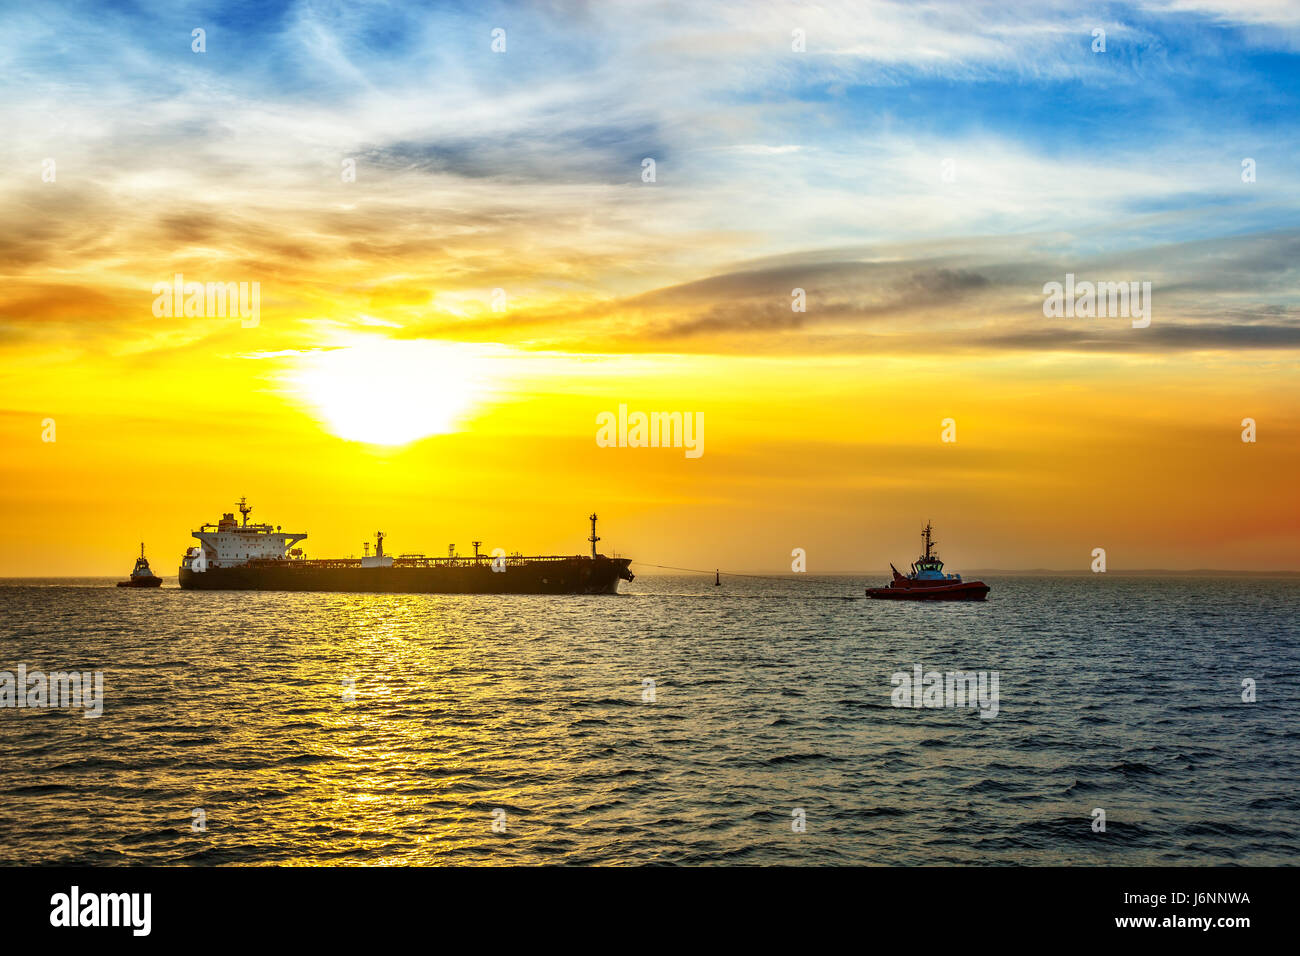 Sonnenuntergang am Meer mit Tanker Schiff. Stockfoto